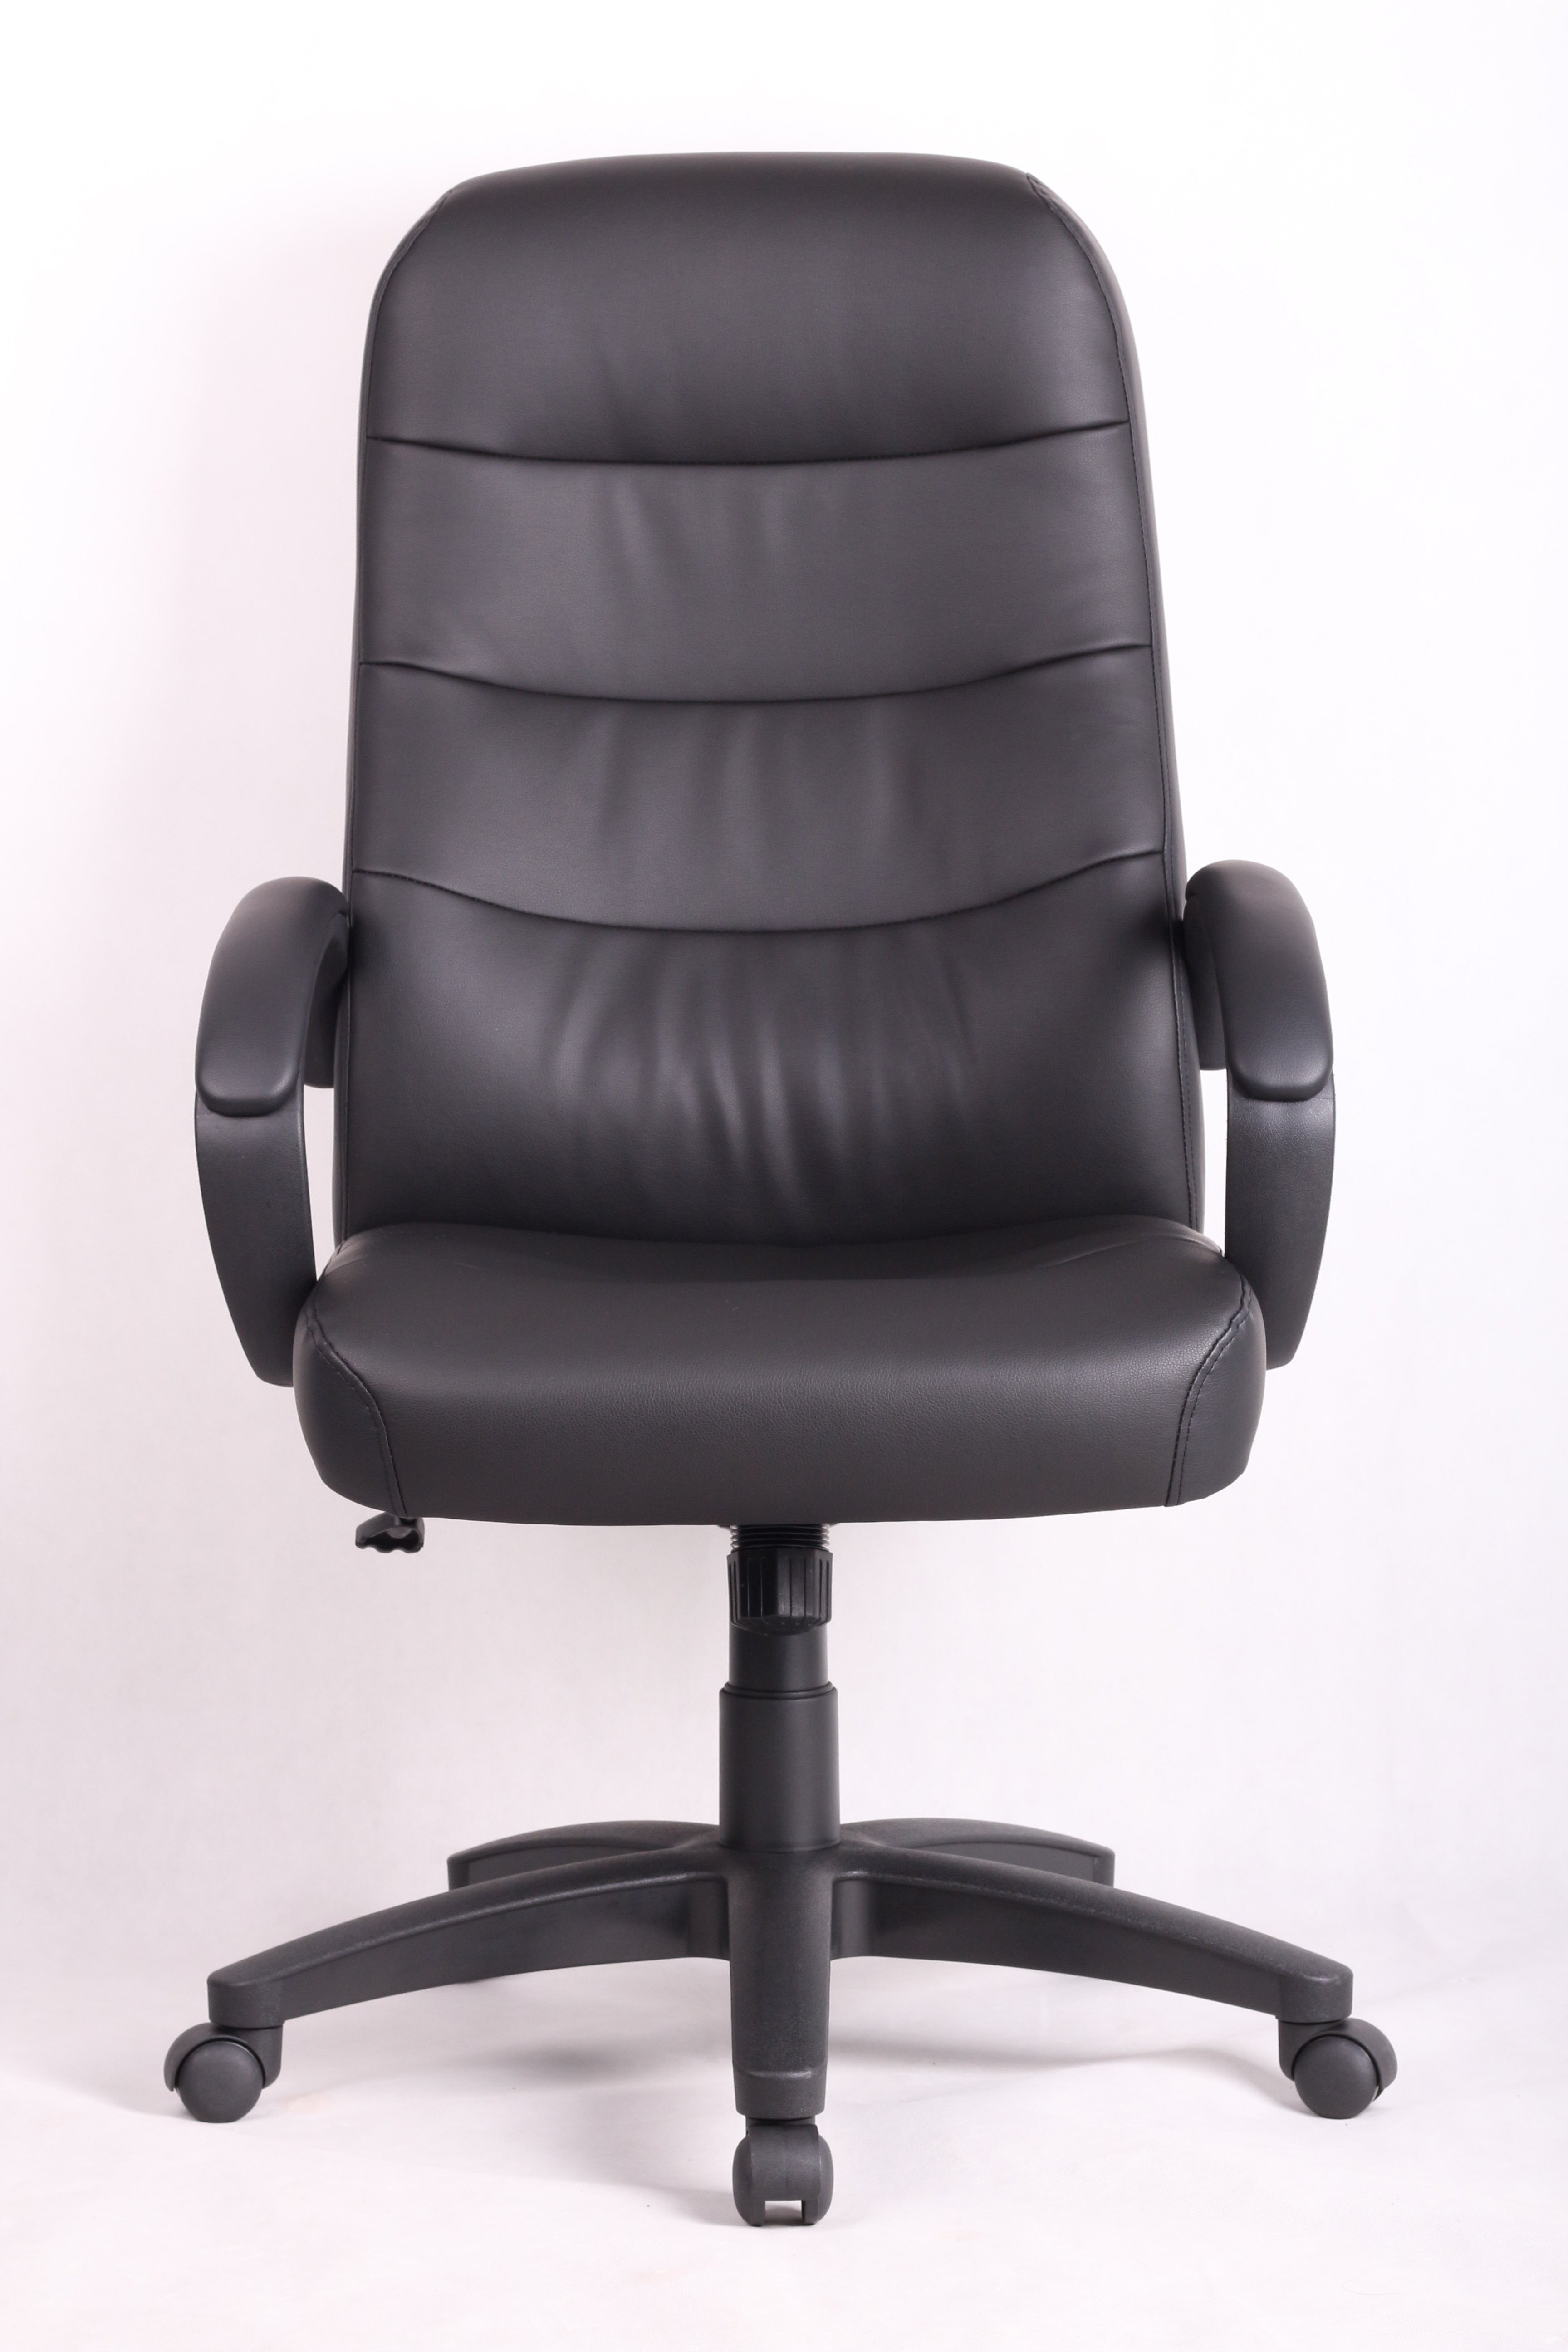 ViscoLogic PRAGMA Ergonomic High-Back Adjustable Swivel Home Office Computer Desk Chair (Black)